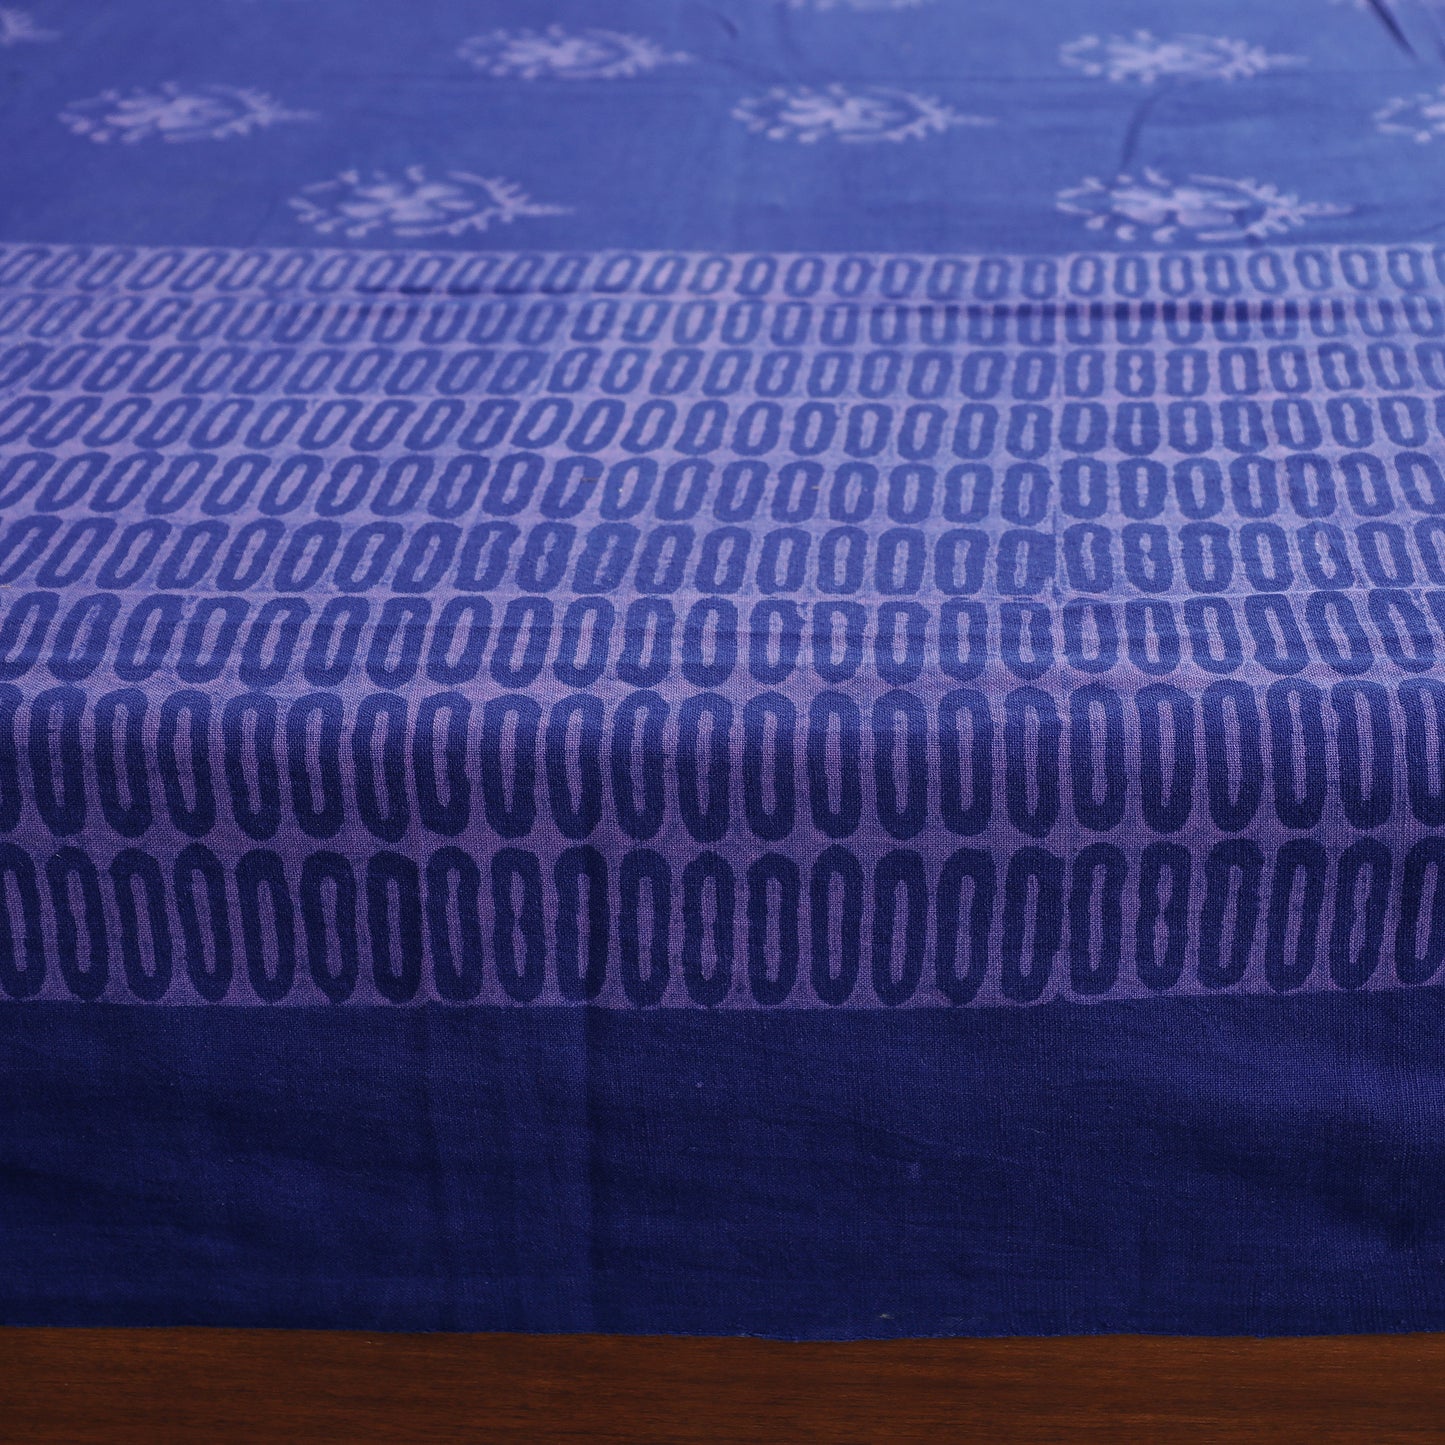 Blue - Akola Block Printing Jhiri Handloom Cotton Double Bed Cover (102 x 87 in)